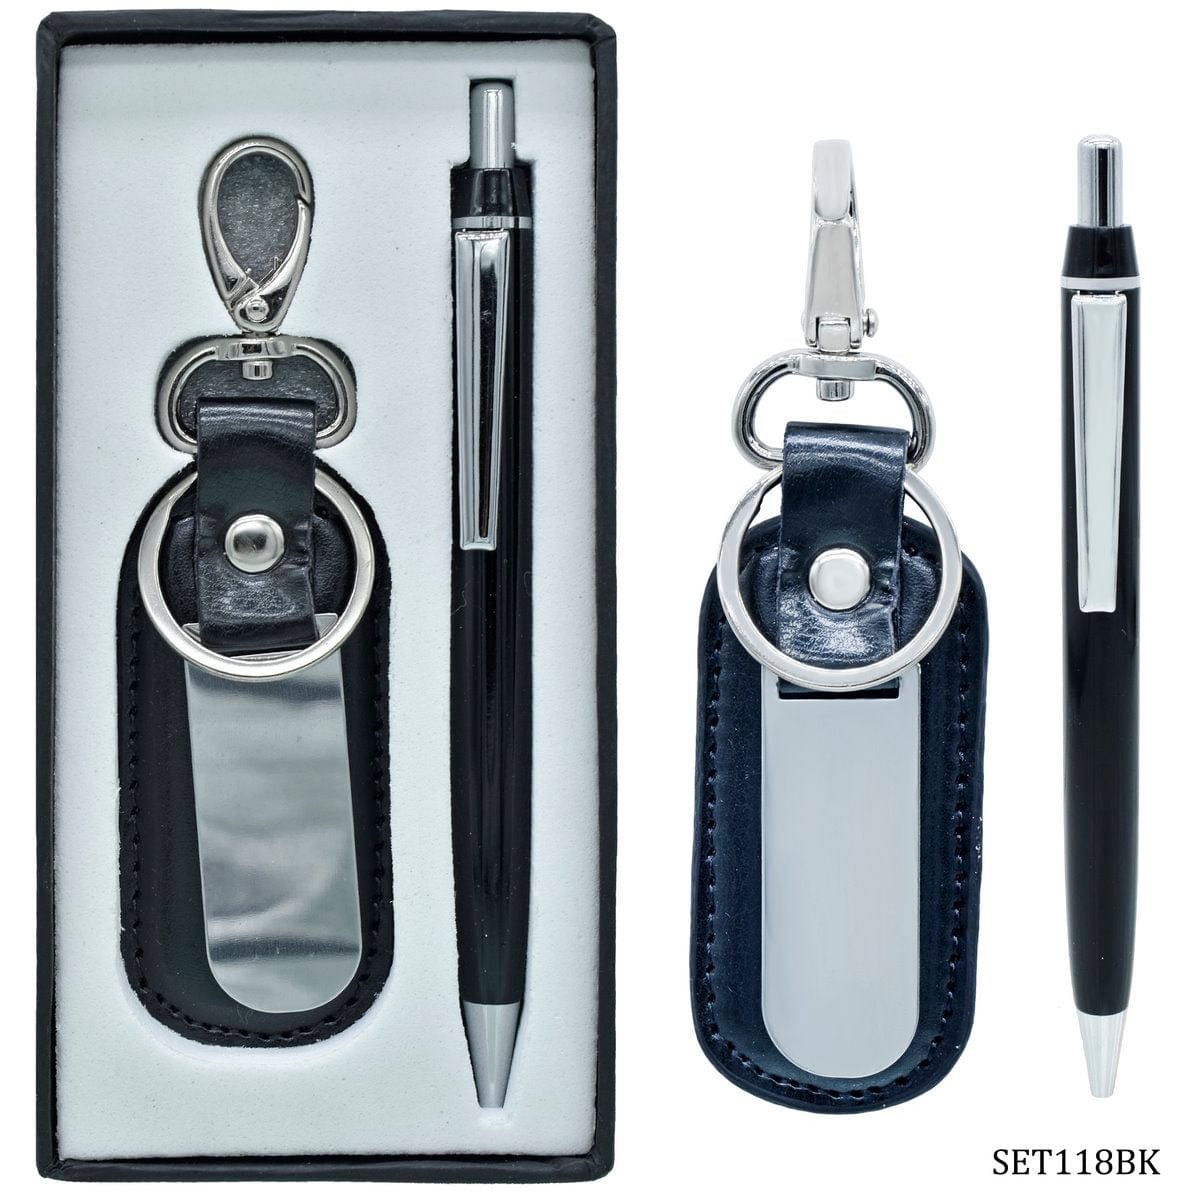 jags-mumbai Pen "Elegant and Versatile: Black Keychain with Pen Gift Set (SET118BK)"